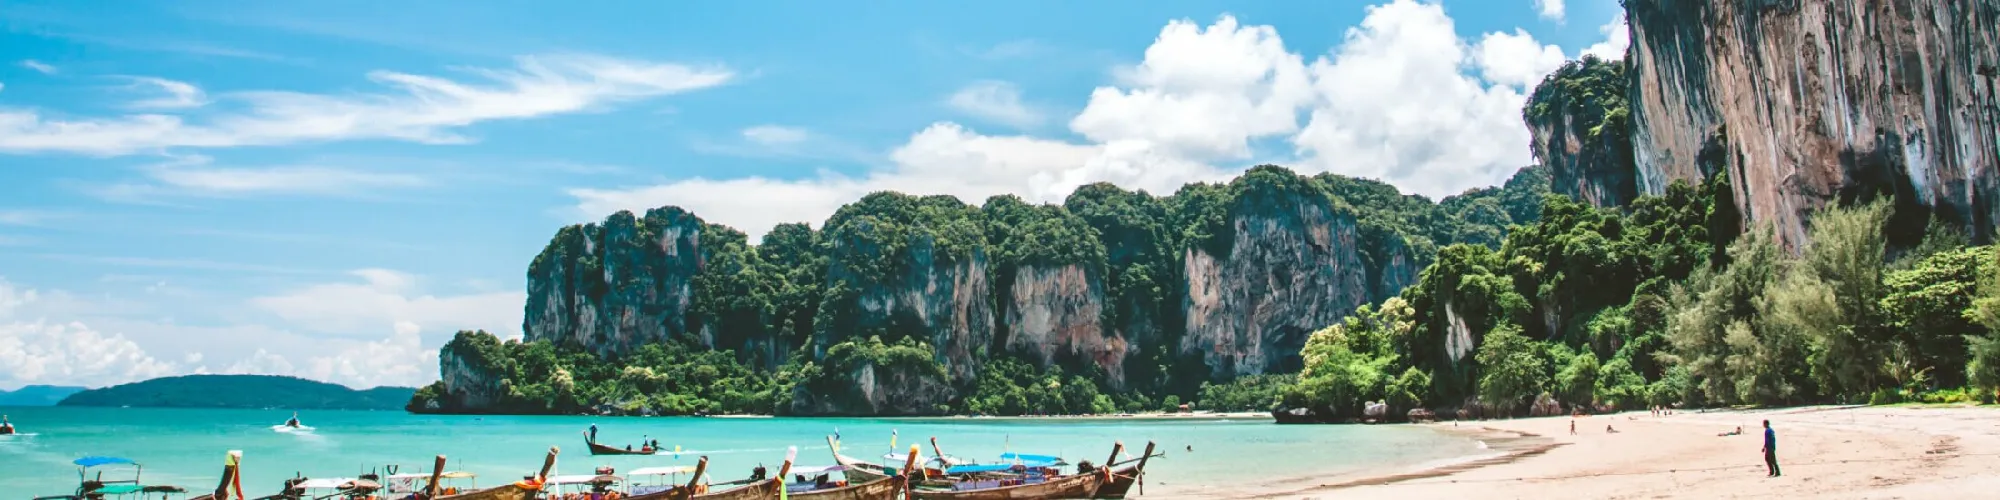 Traumreise nach Thailand background image